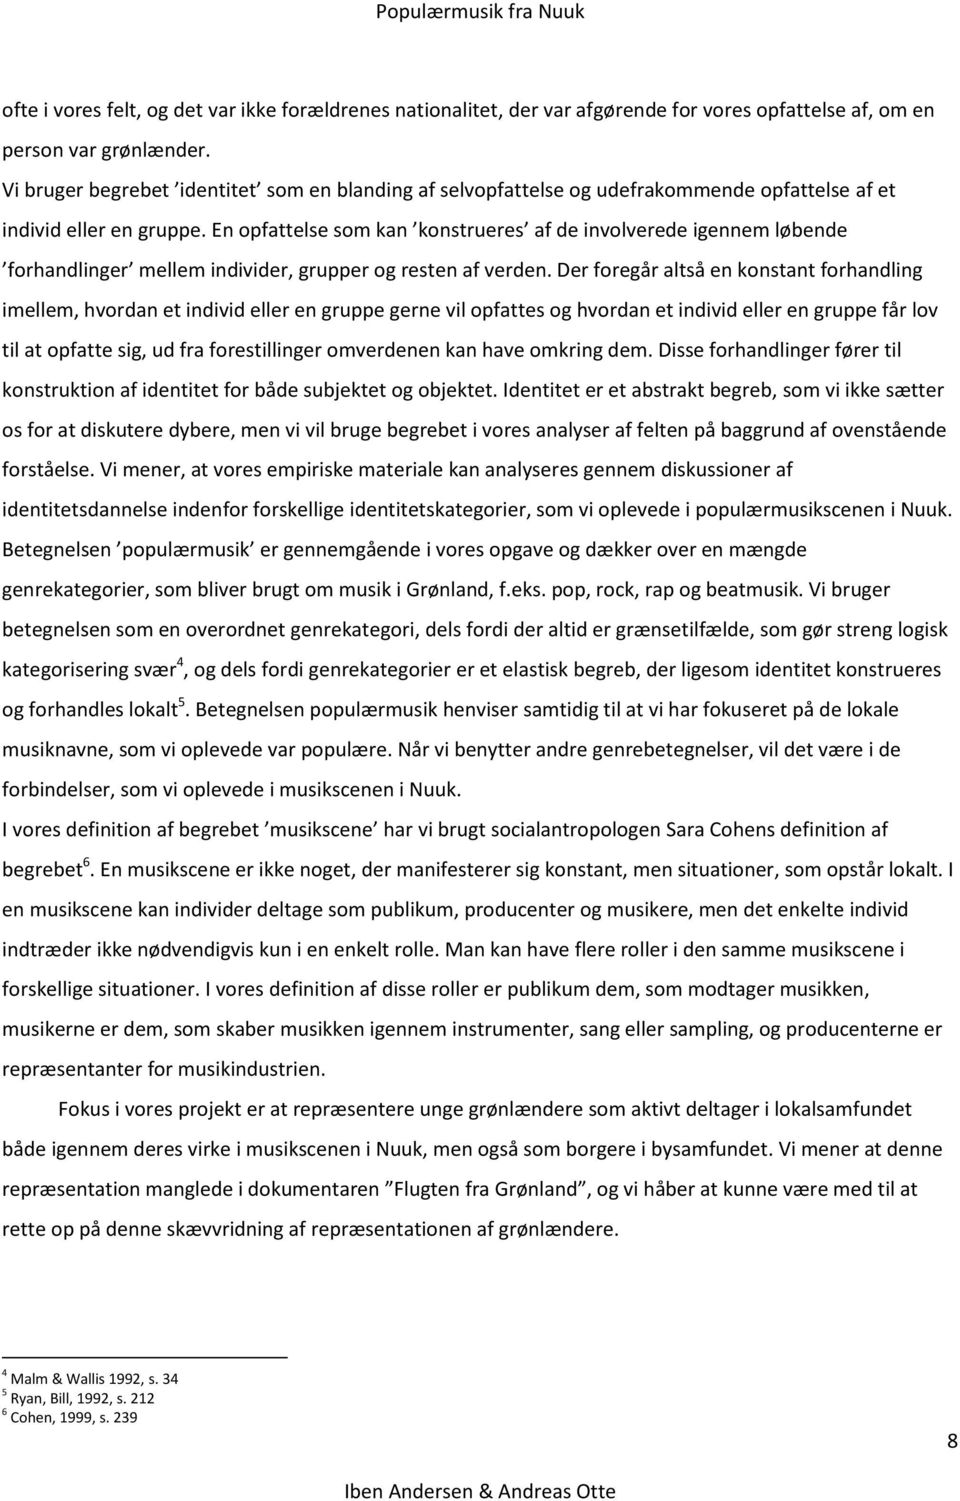 POPULÆRMUSIK FRA NUUK - PDF Gratis download